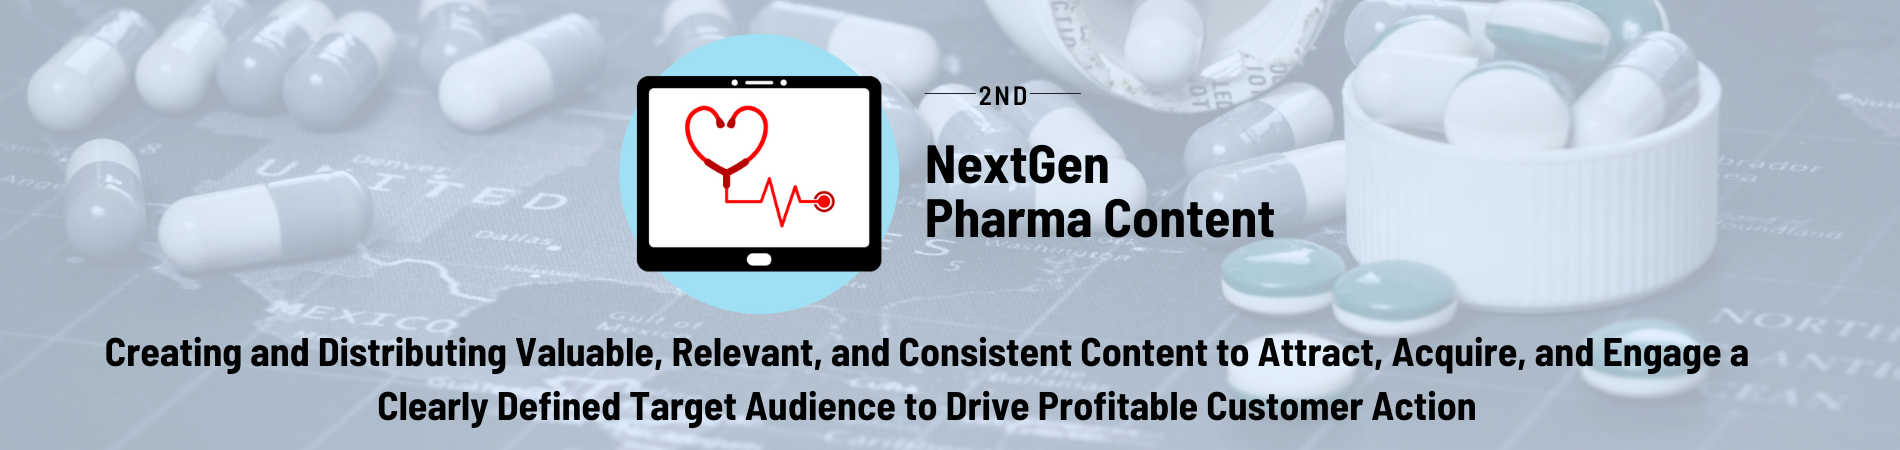 2nd NextGen Pharma Content